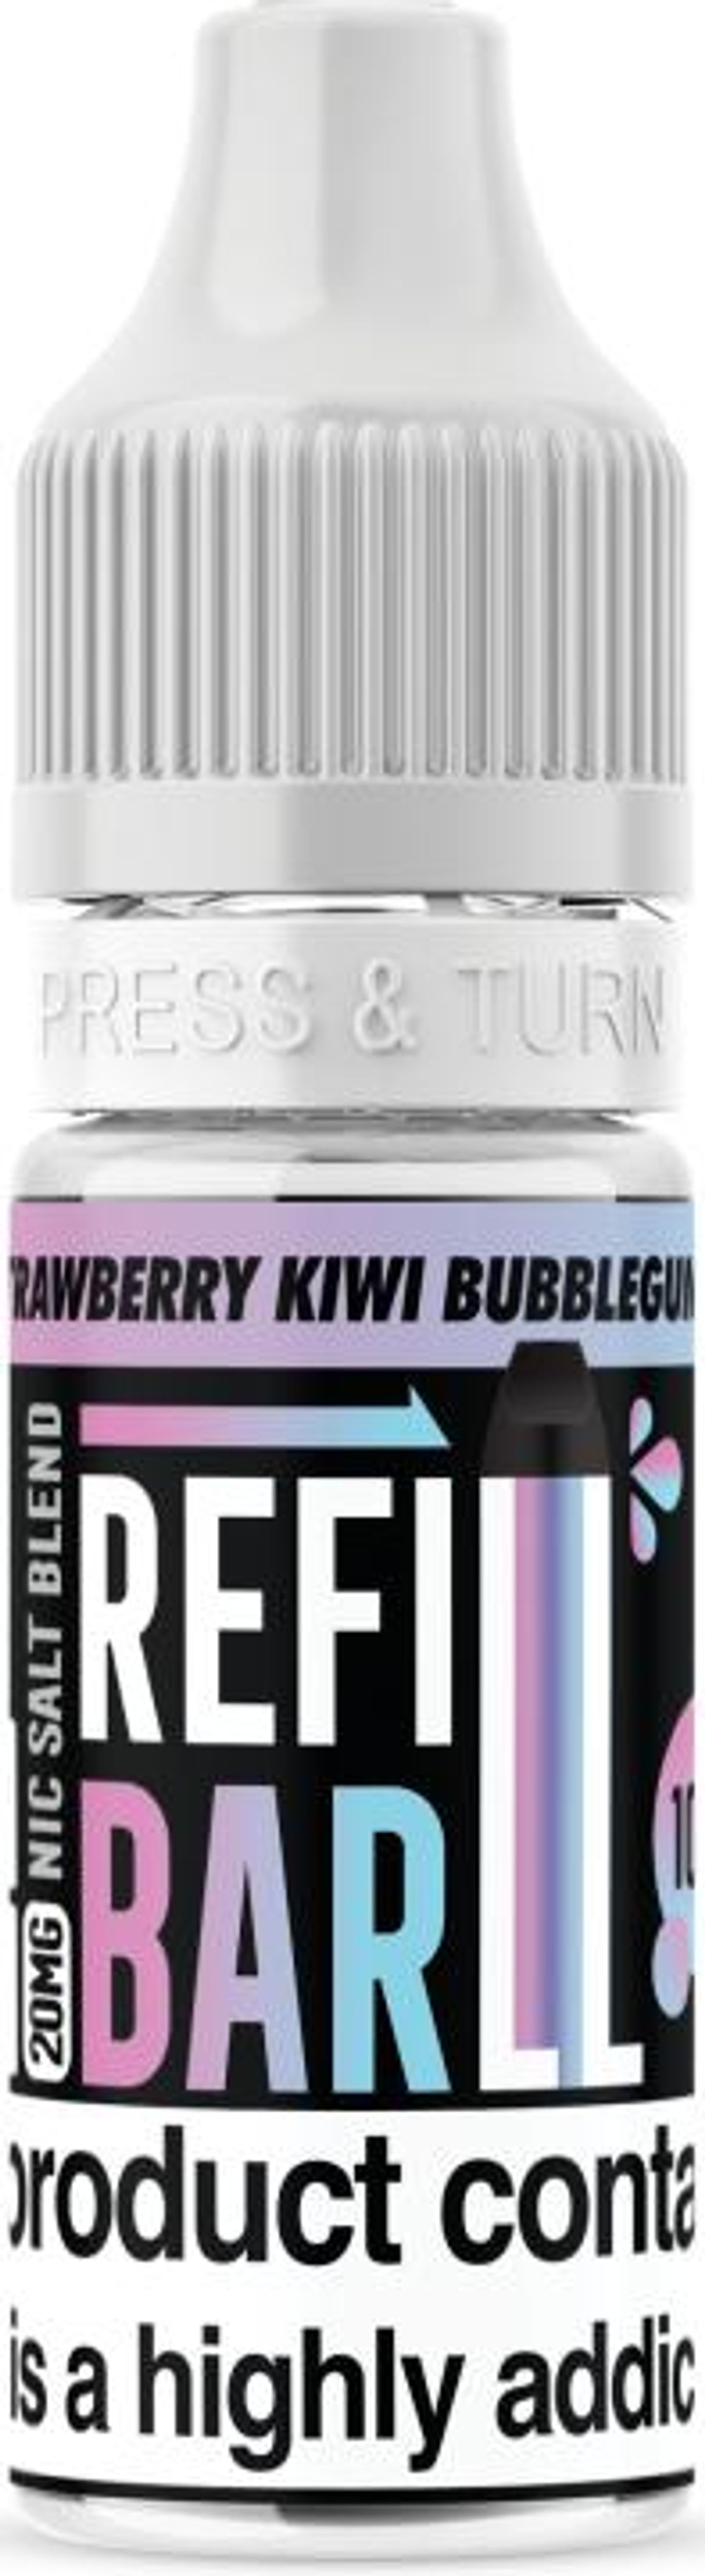 Image of Strawberry Kiwi Bubblegum by Refill Bar Salts